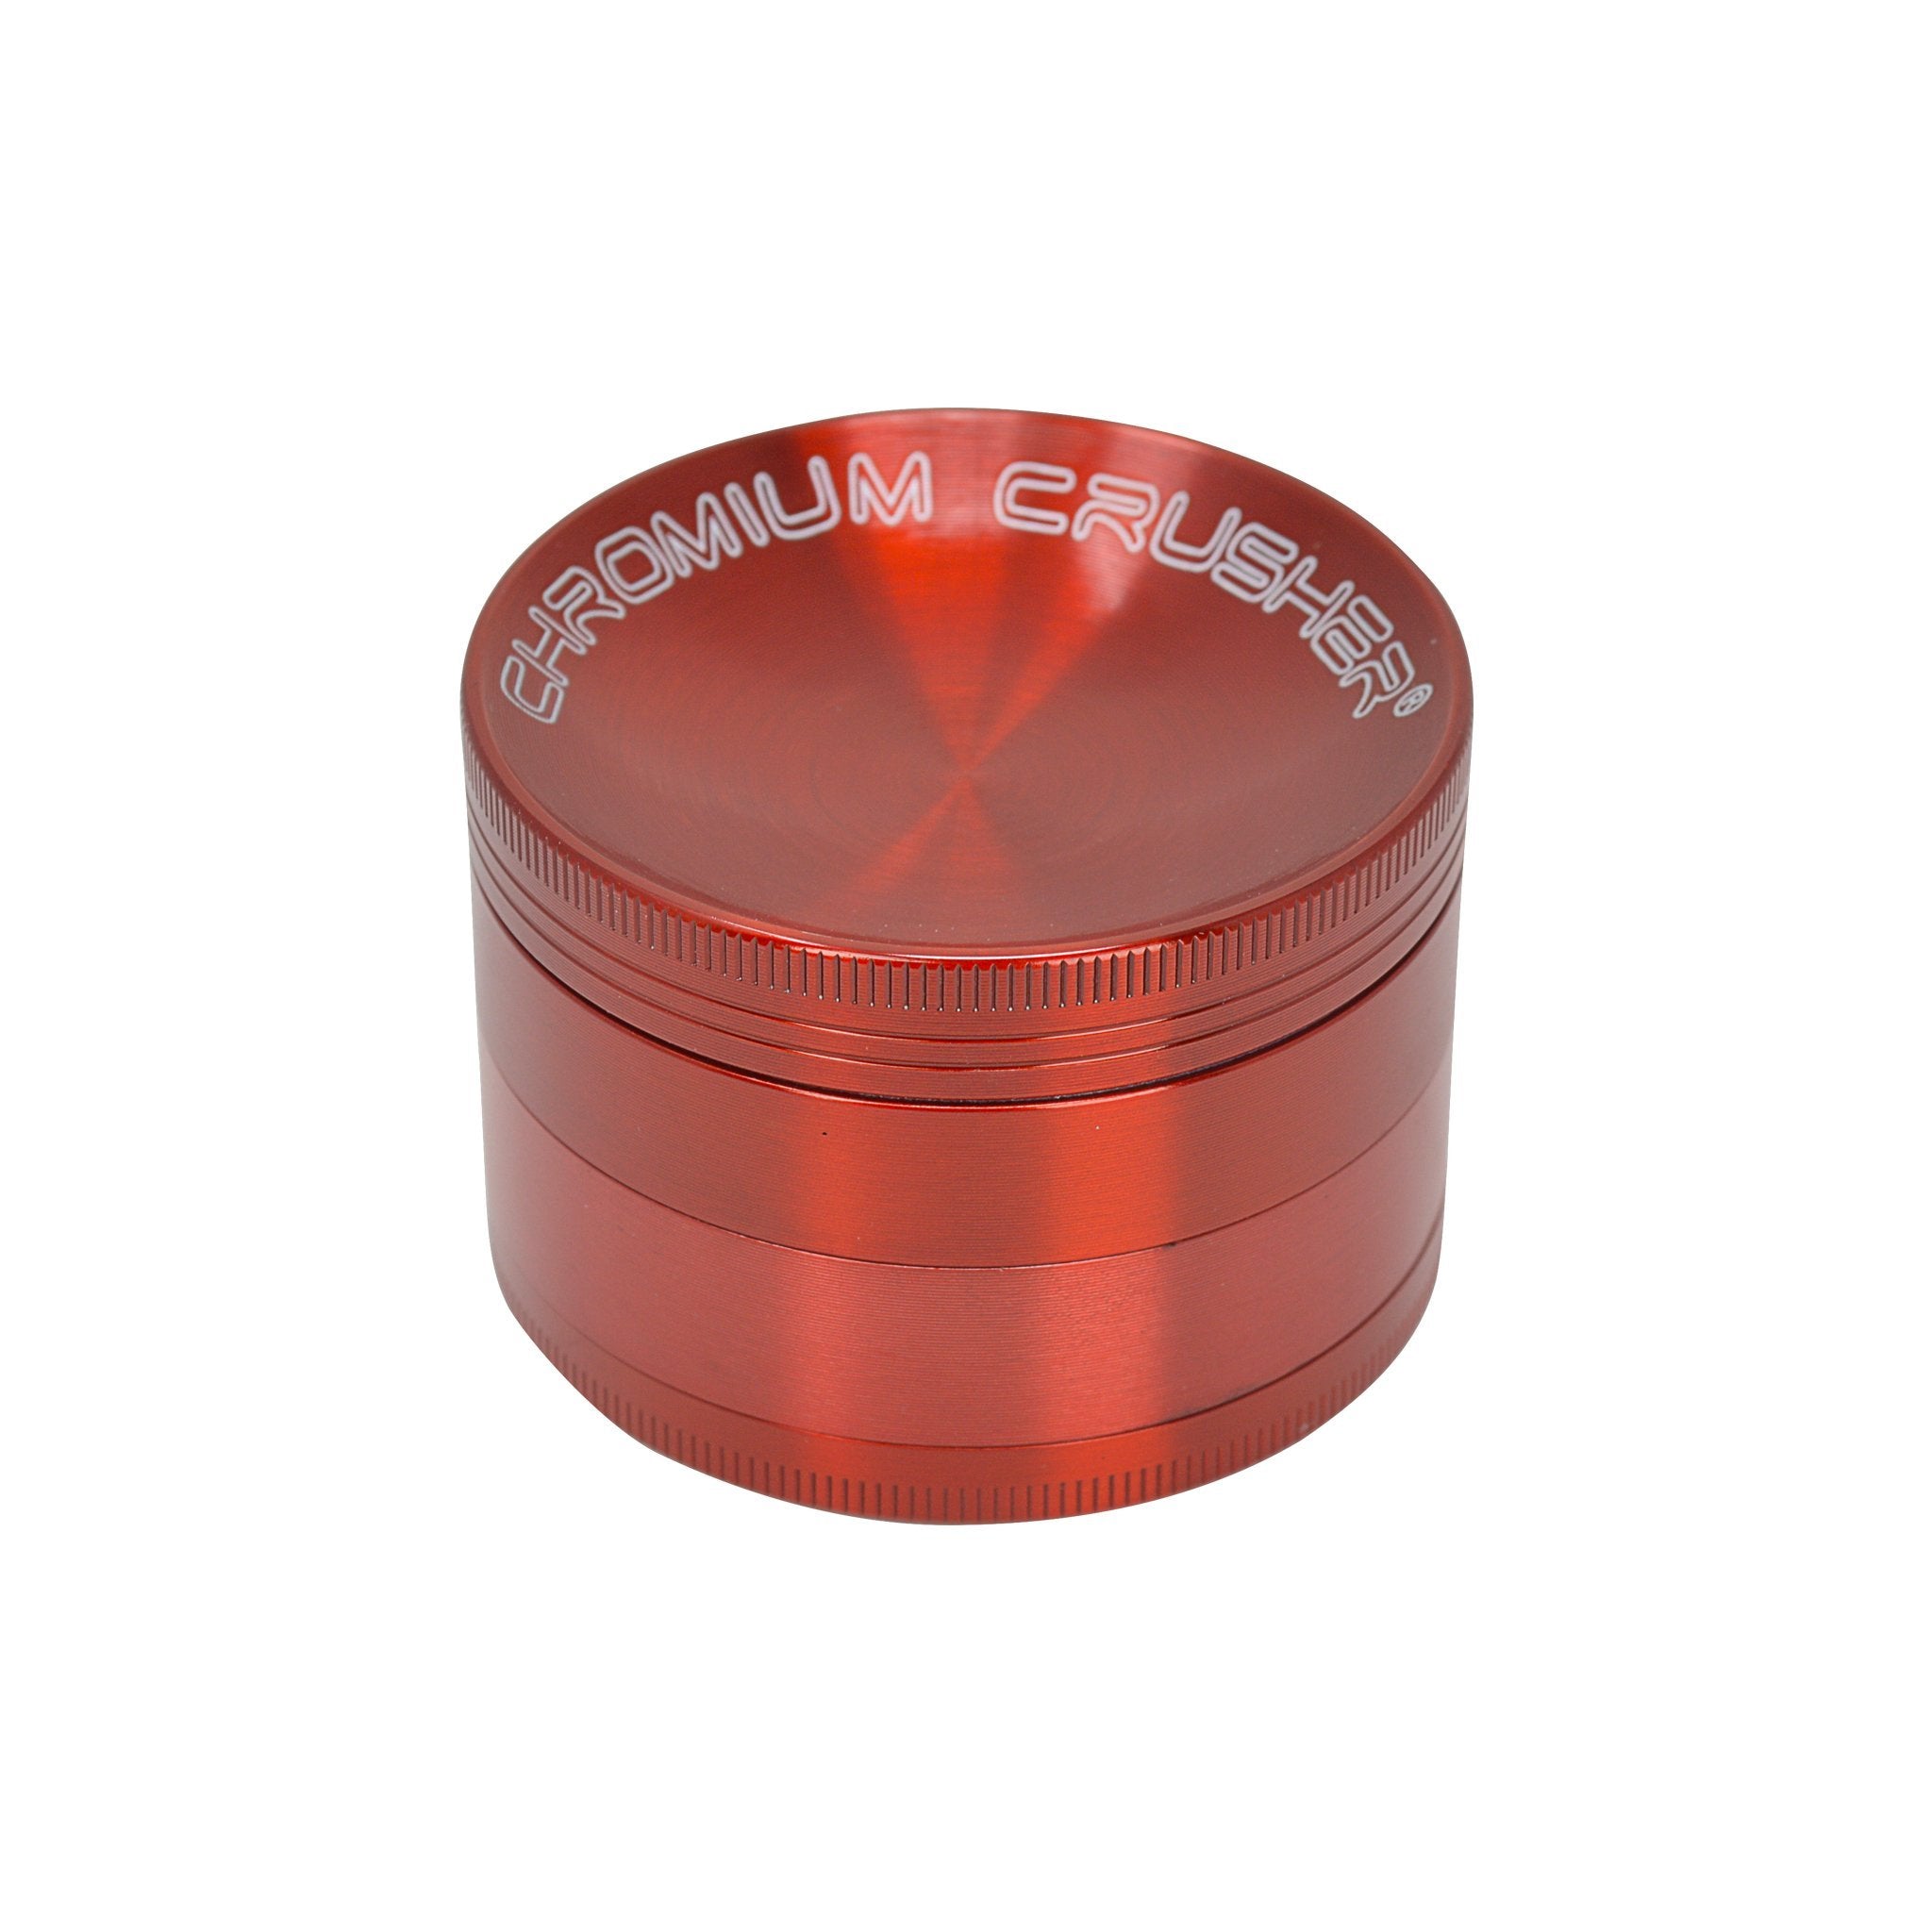 63mm 4-piece round aluminum crusher smoking accessory red metallic and Chromium Crusher label on lid